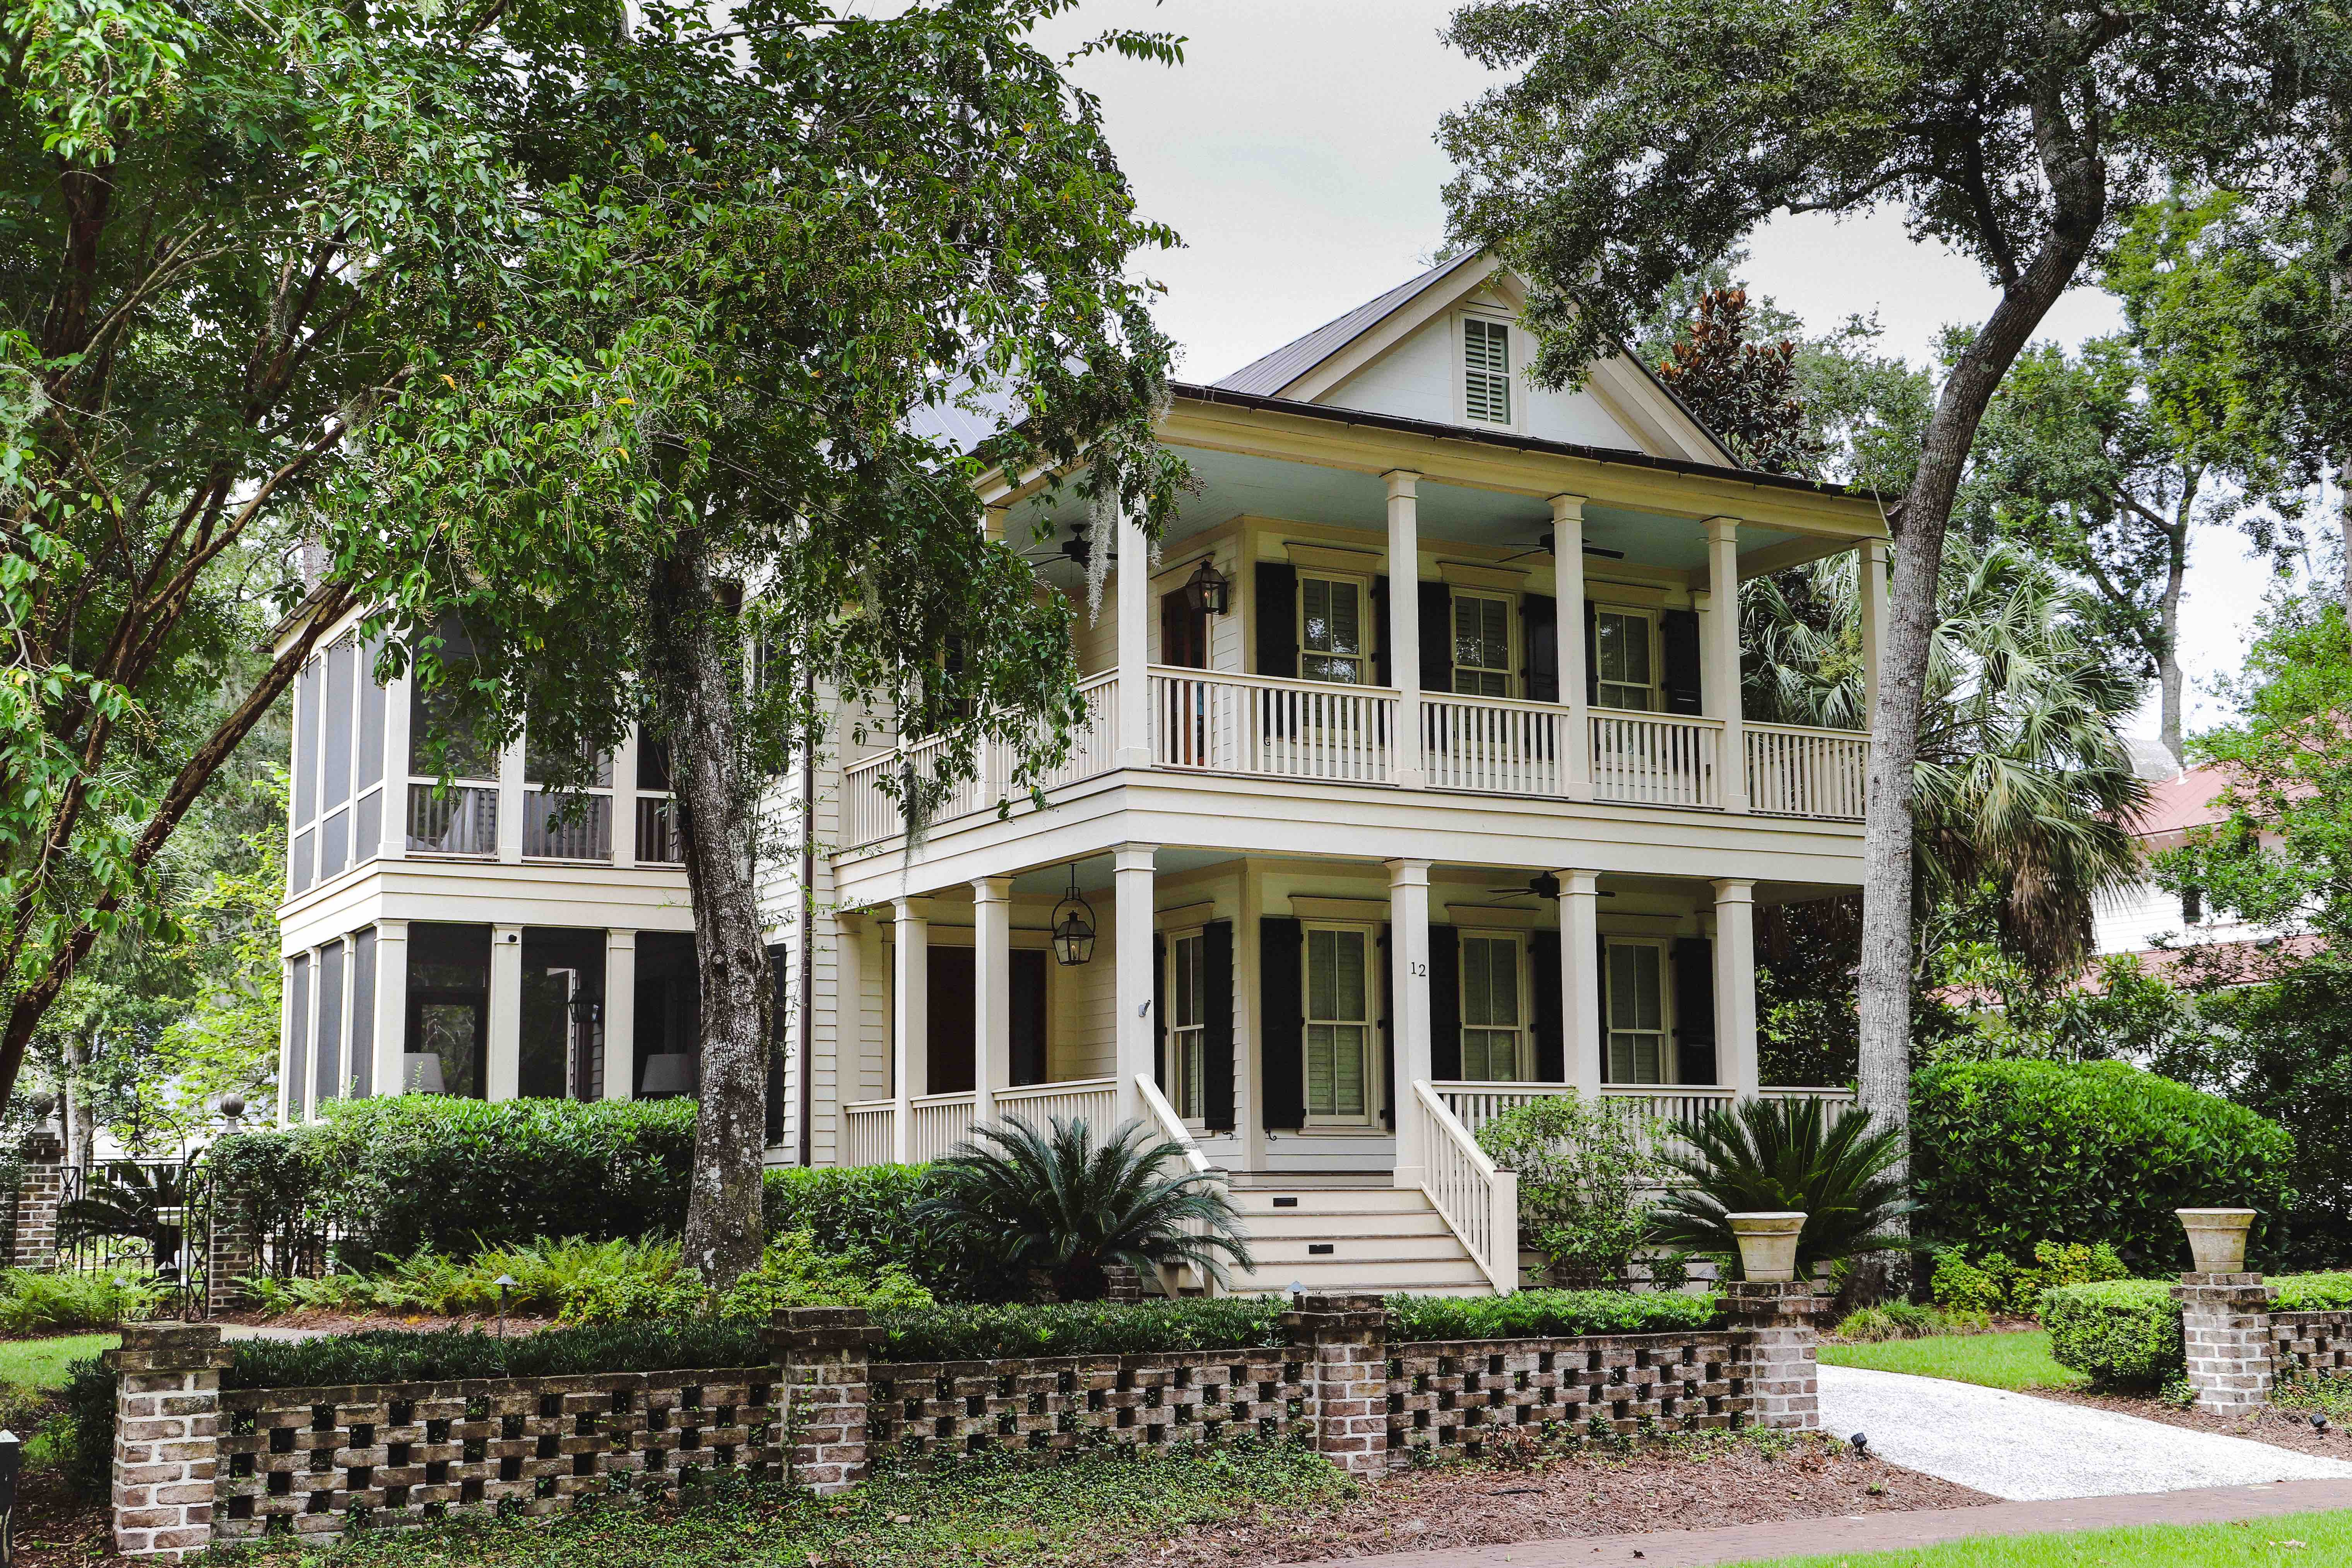 Home with Charleston-style architecture in Palmetto Bluff SC